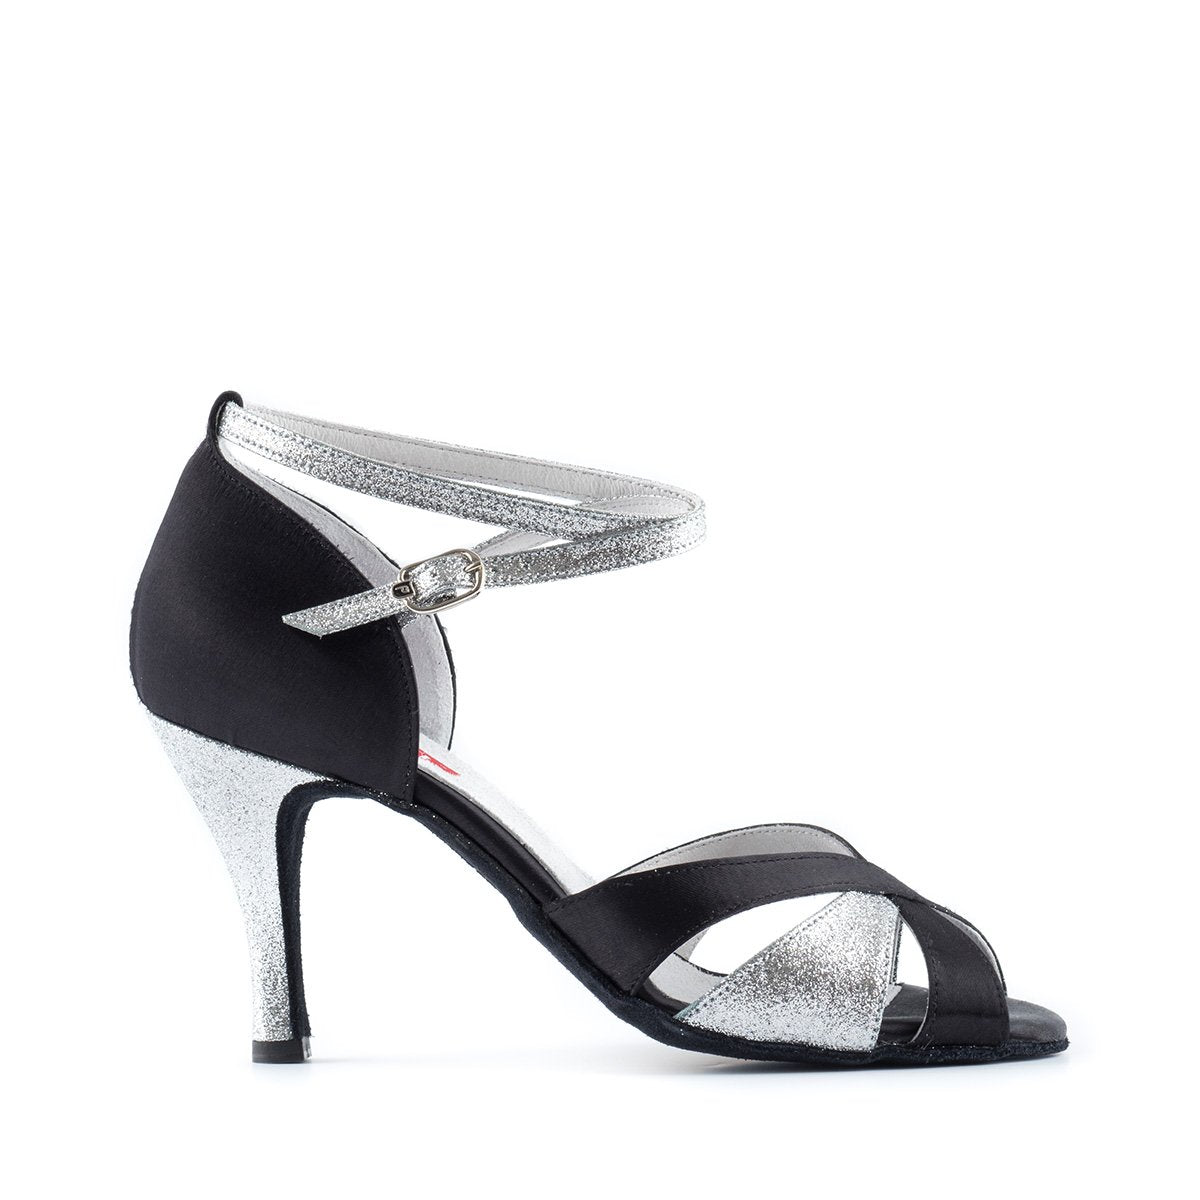 Ladies Black Satin Argentine Tango Dance Shoe with Silver Glitter